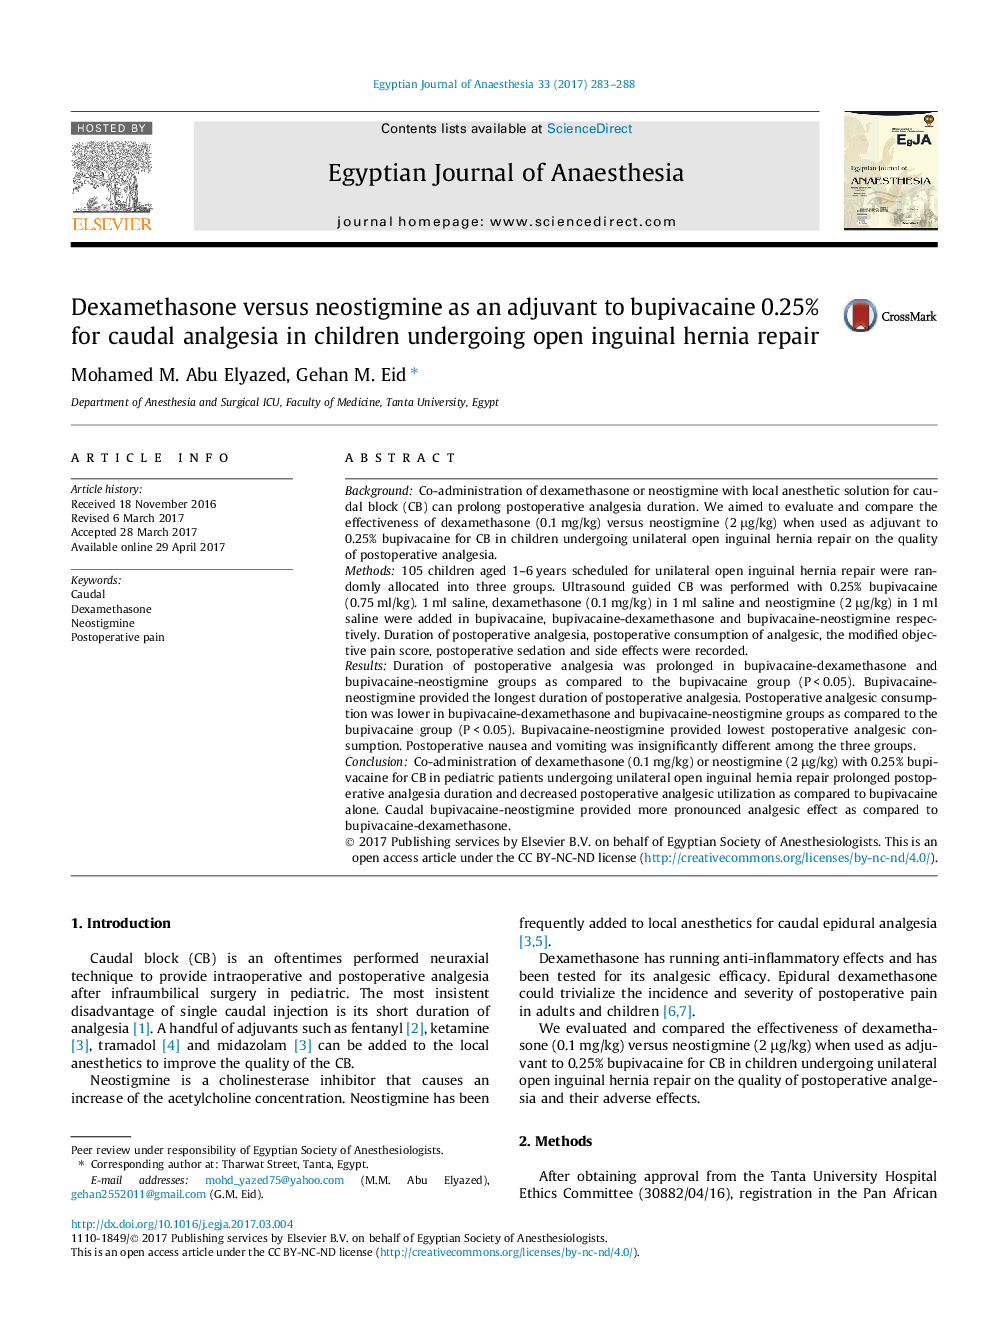 Dexamethasone versus neostigmine as an adjuvant to bupivacaine 0.25% for caudal analgesia in children undergoing open inguinal hernia repair